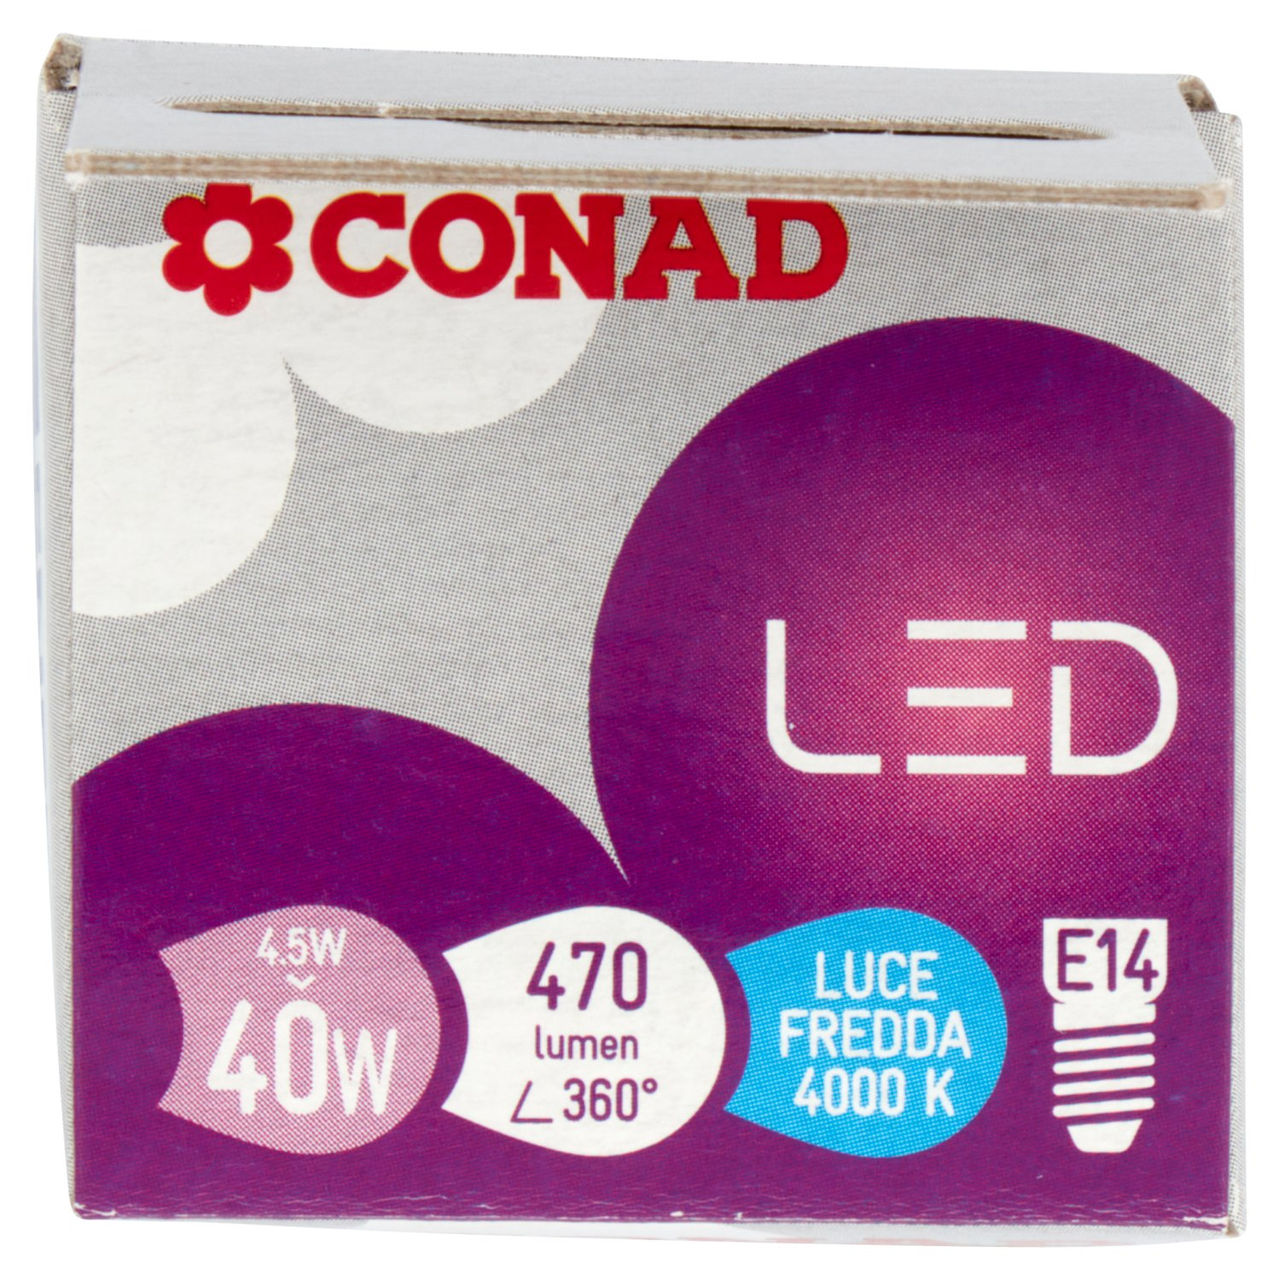 CONAD Led 4.5W 470 Lumen E14 Luce Fredda